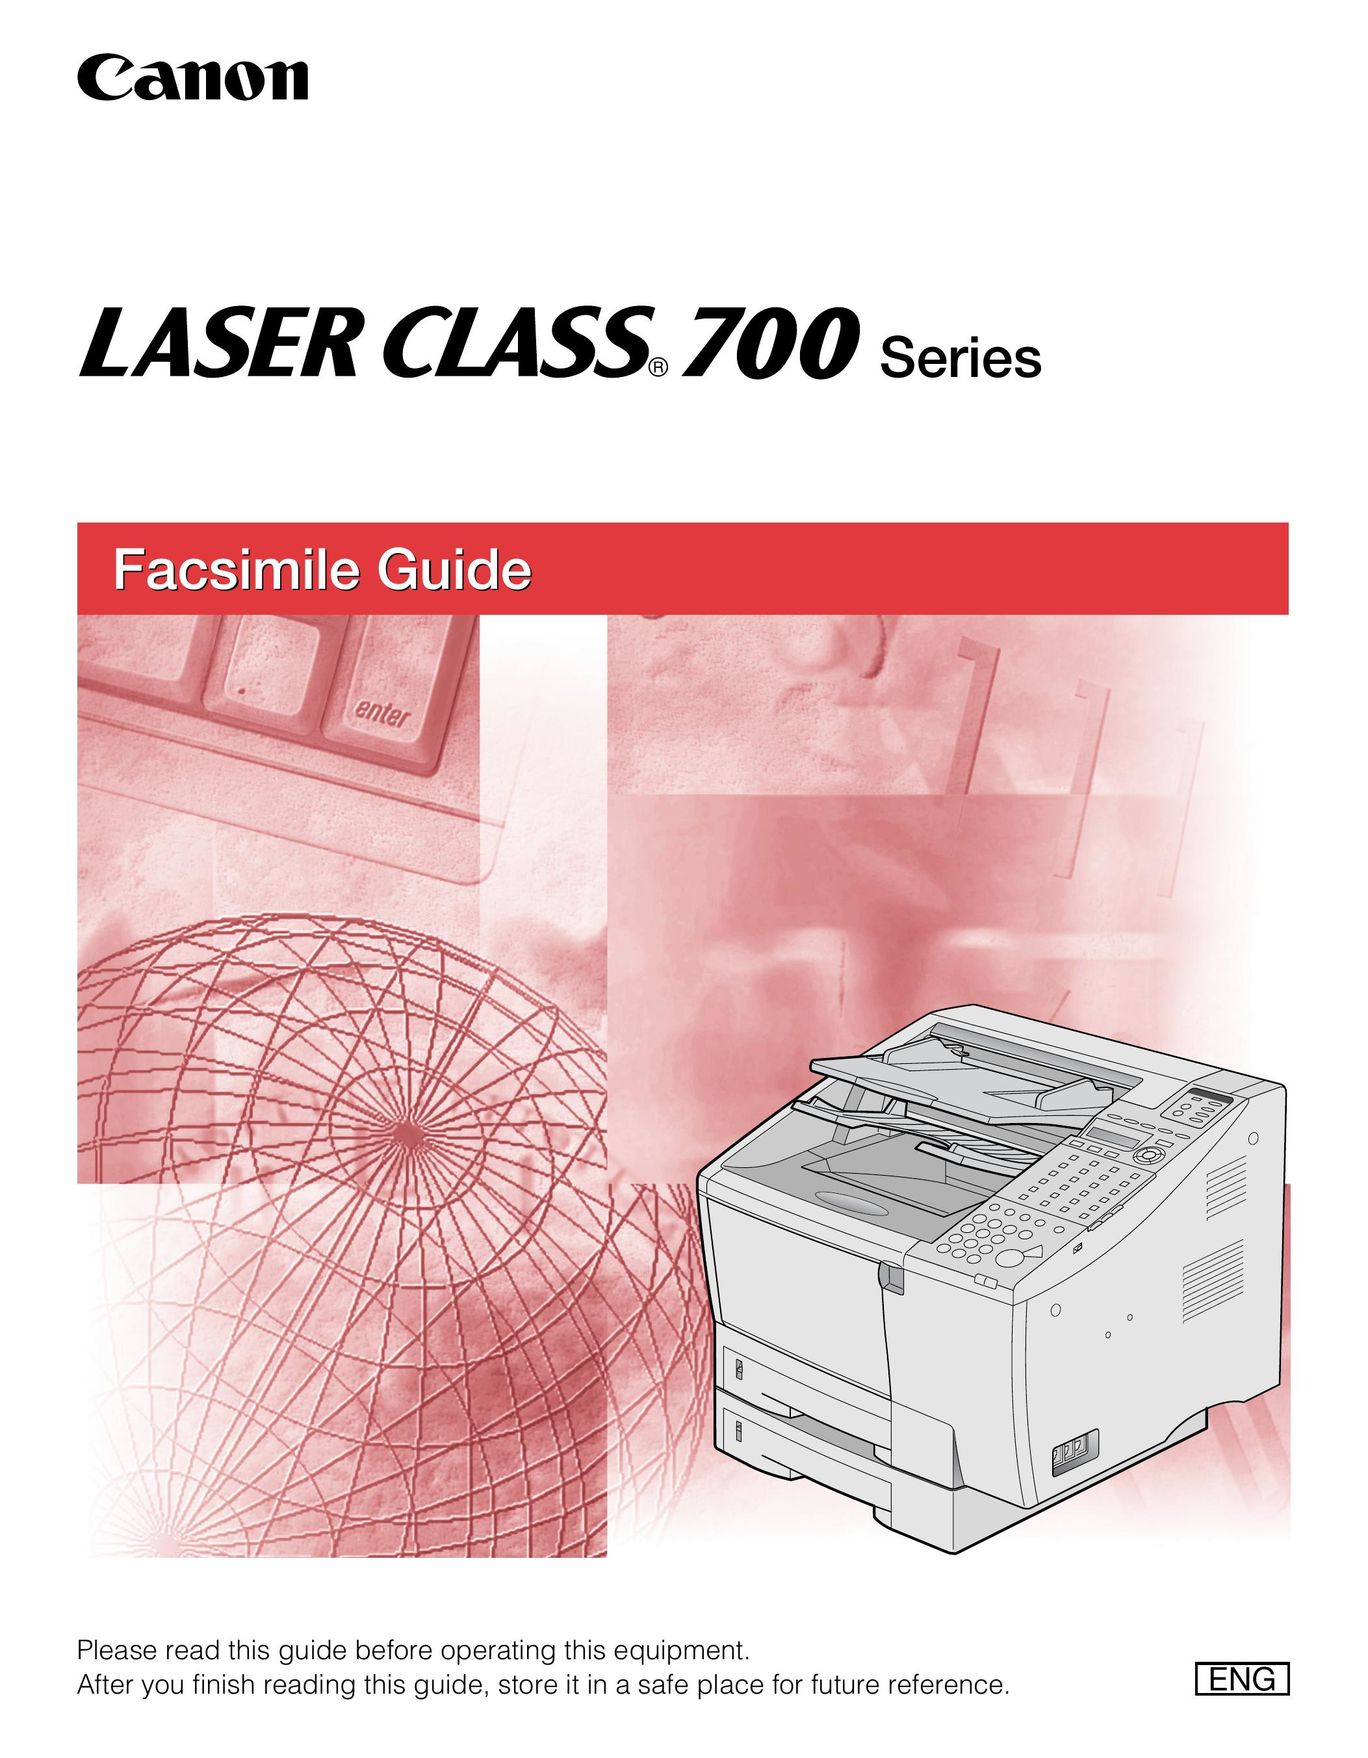 Canon 700 Series Fax Machine User Manual